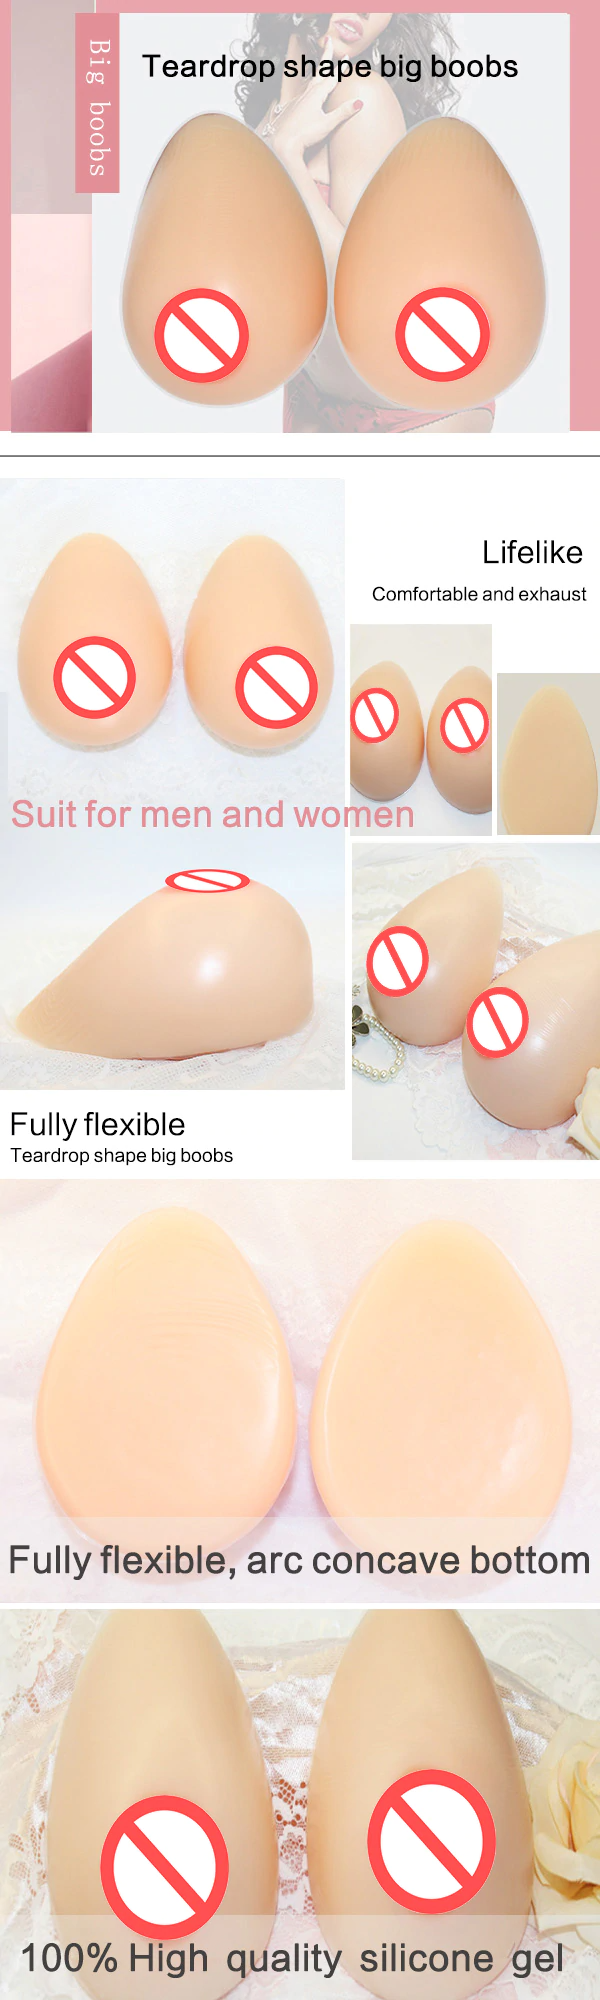 Teardrop Silicone Breast Form - Details